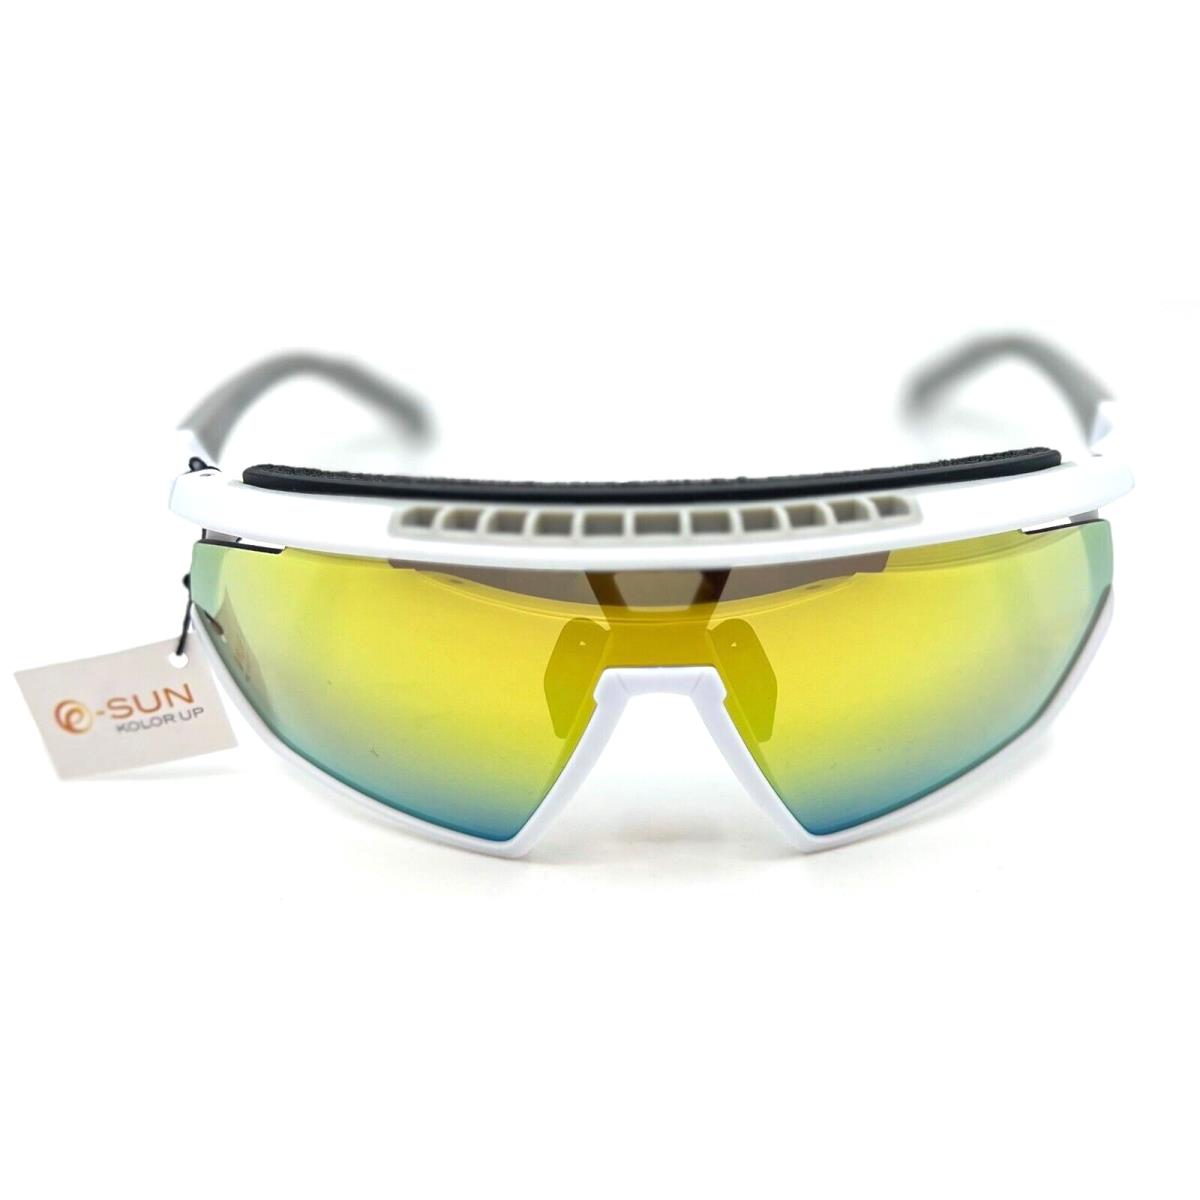 Adidas Sport - SP0029-H 21G 140 - White - Sunglasses Case